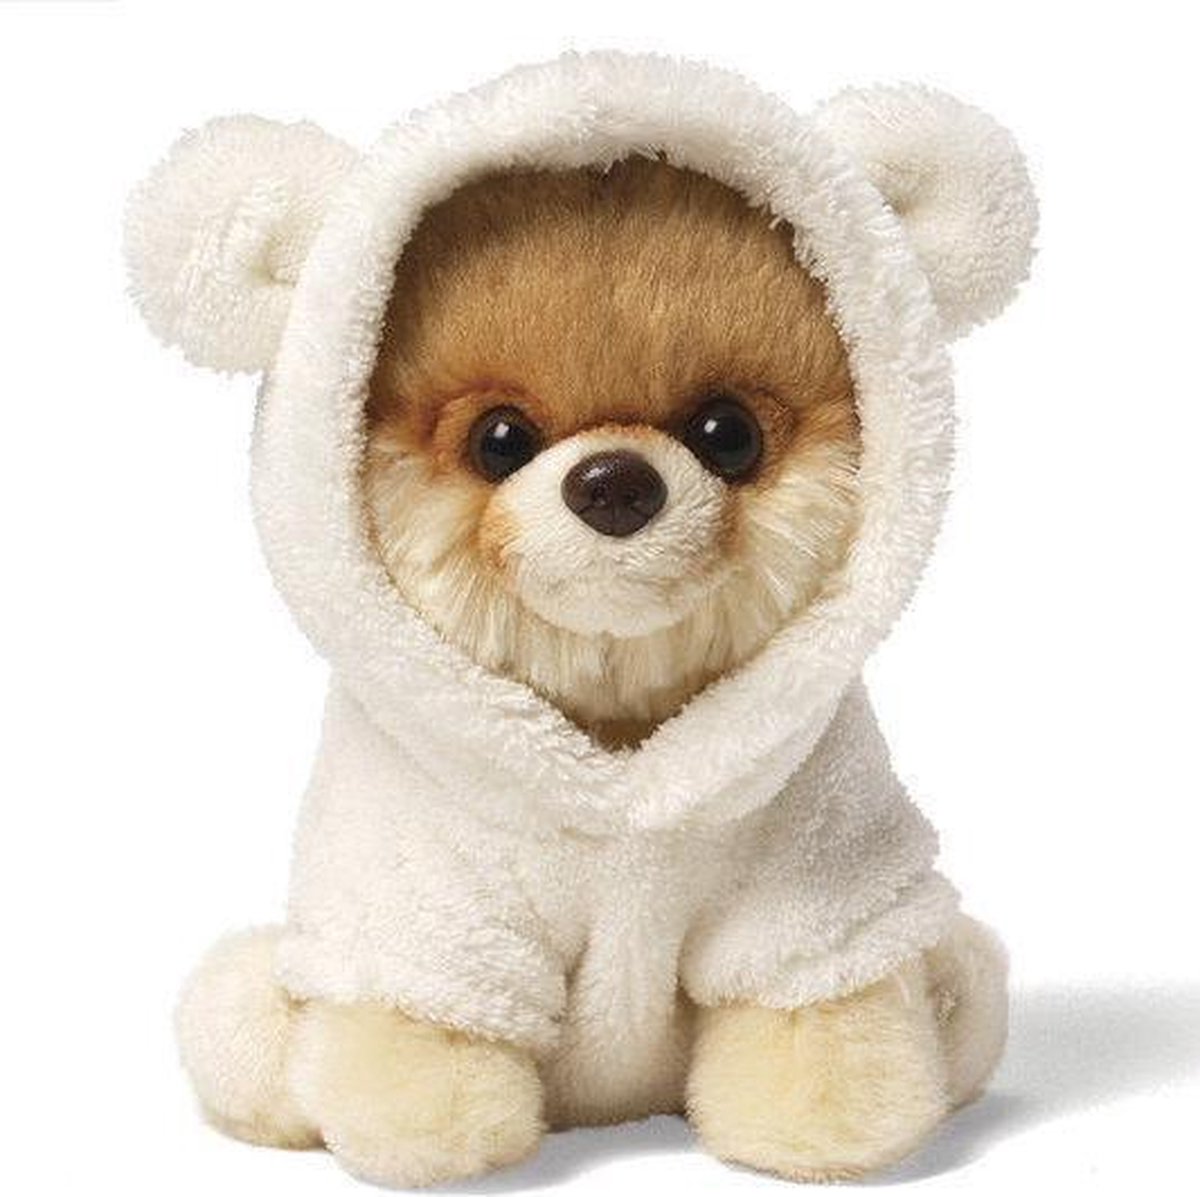 Boo the World's Cutest Dog - Itty Bitty Boo Suit bol.com